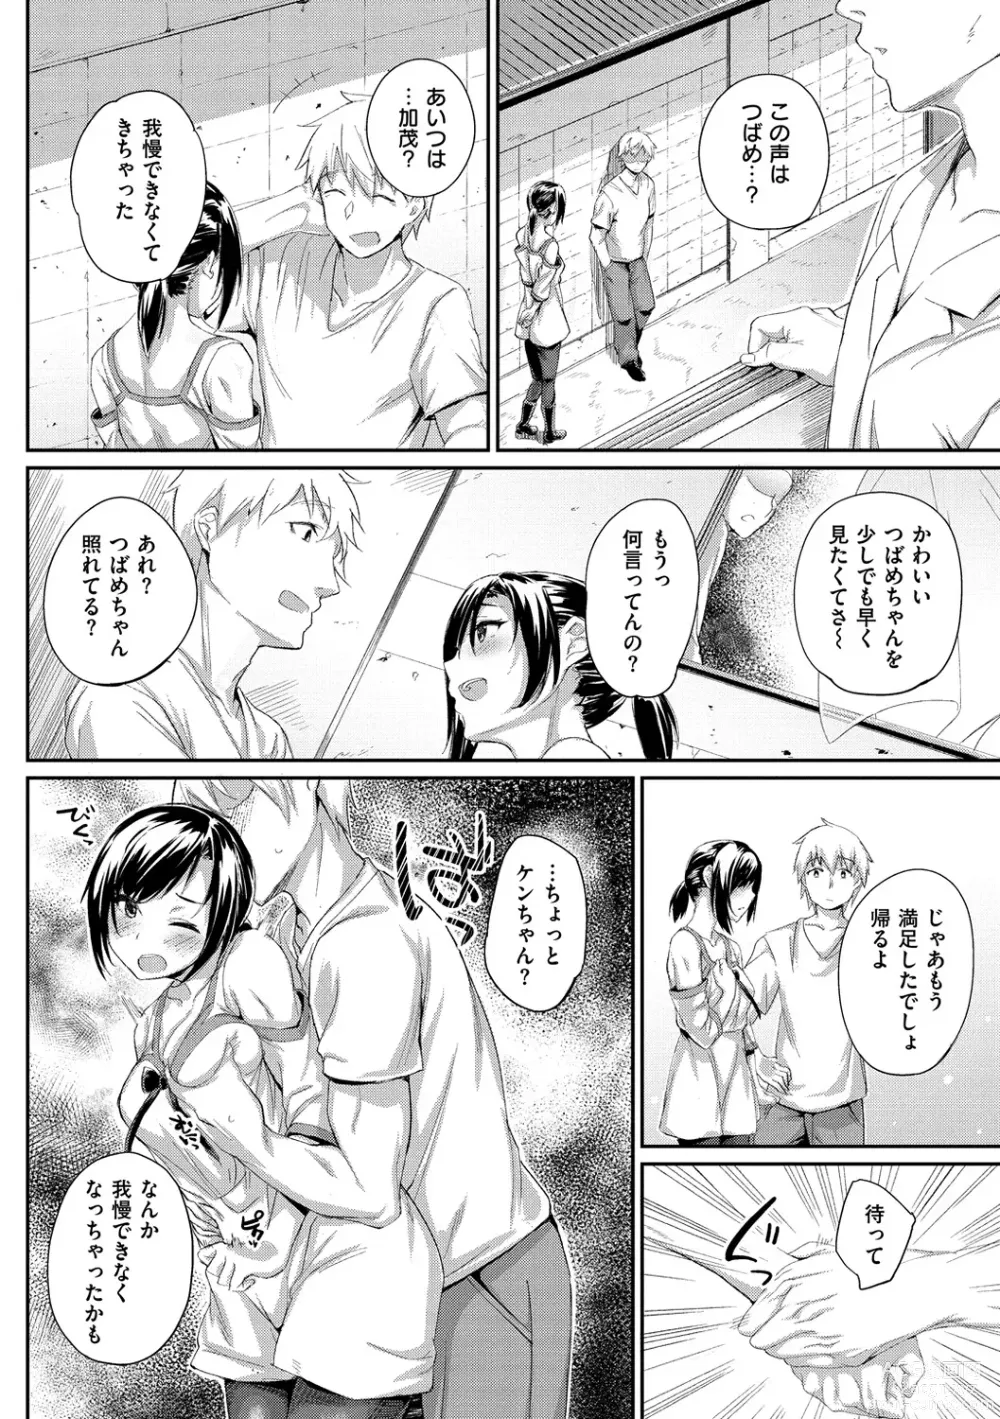 Page 187 of manga Himitsu no Decoration